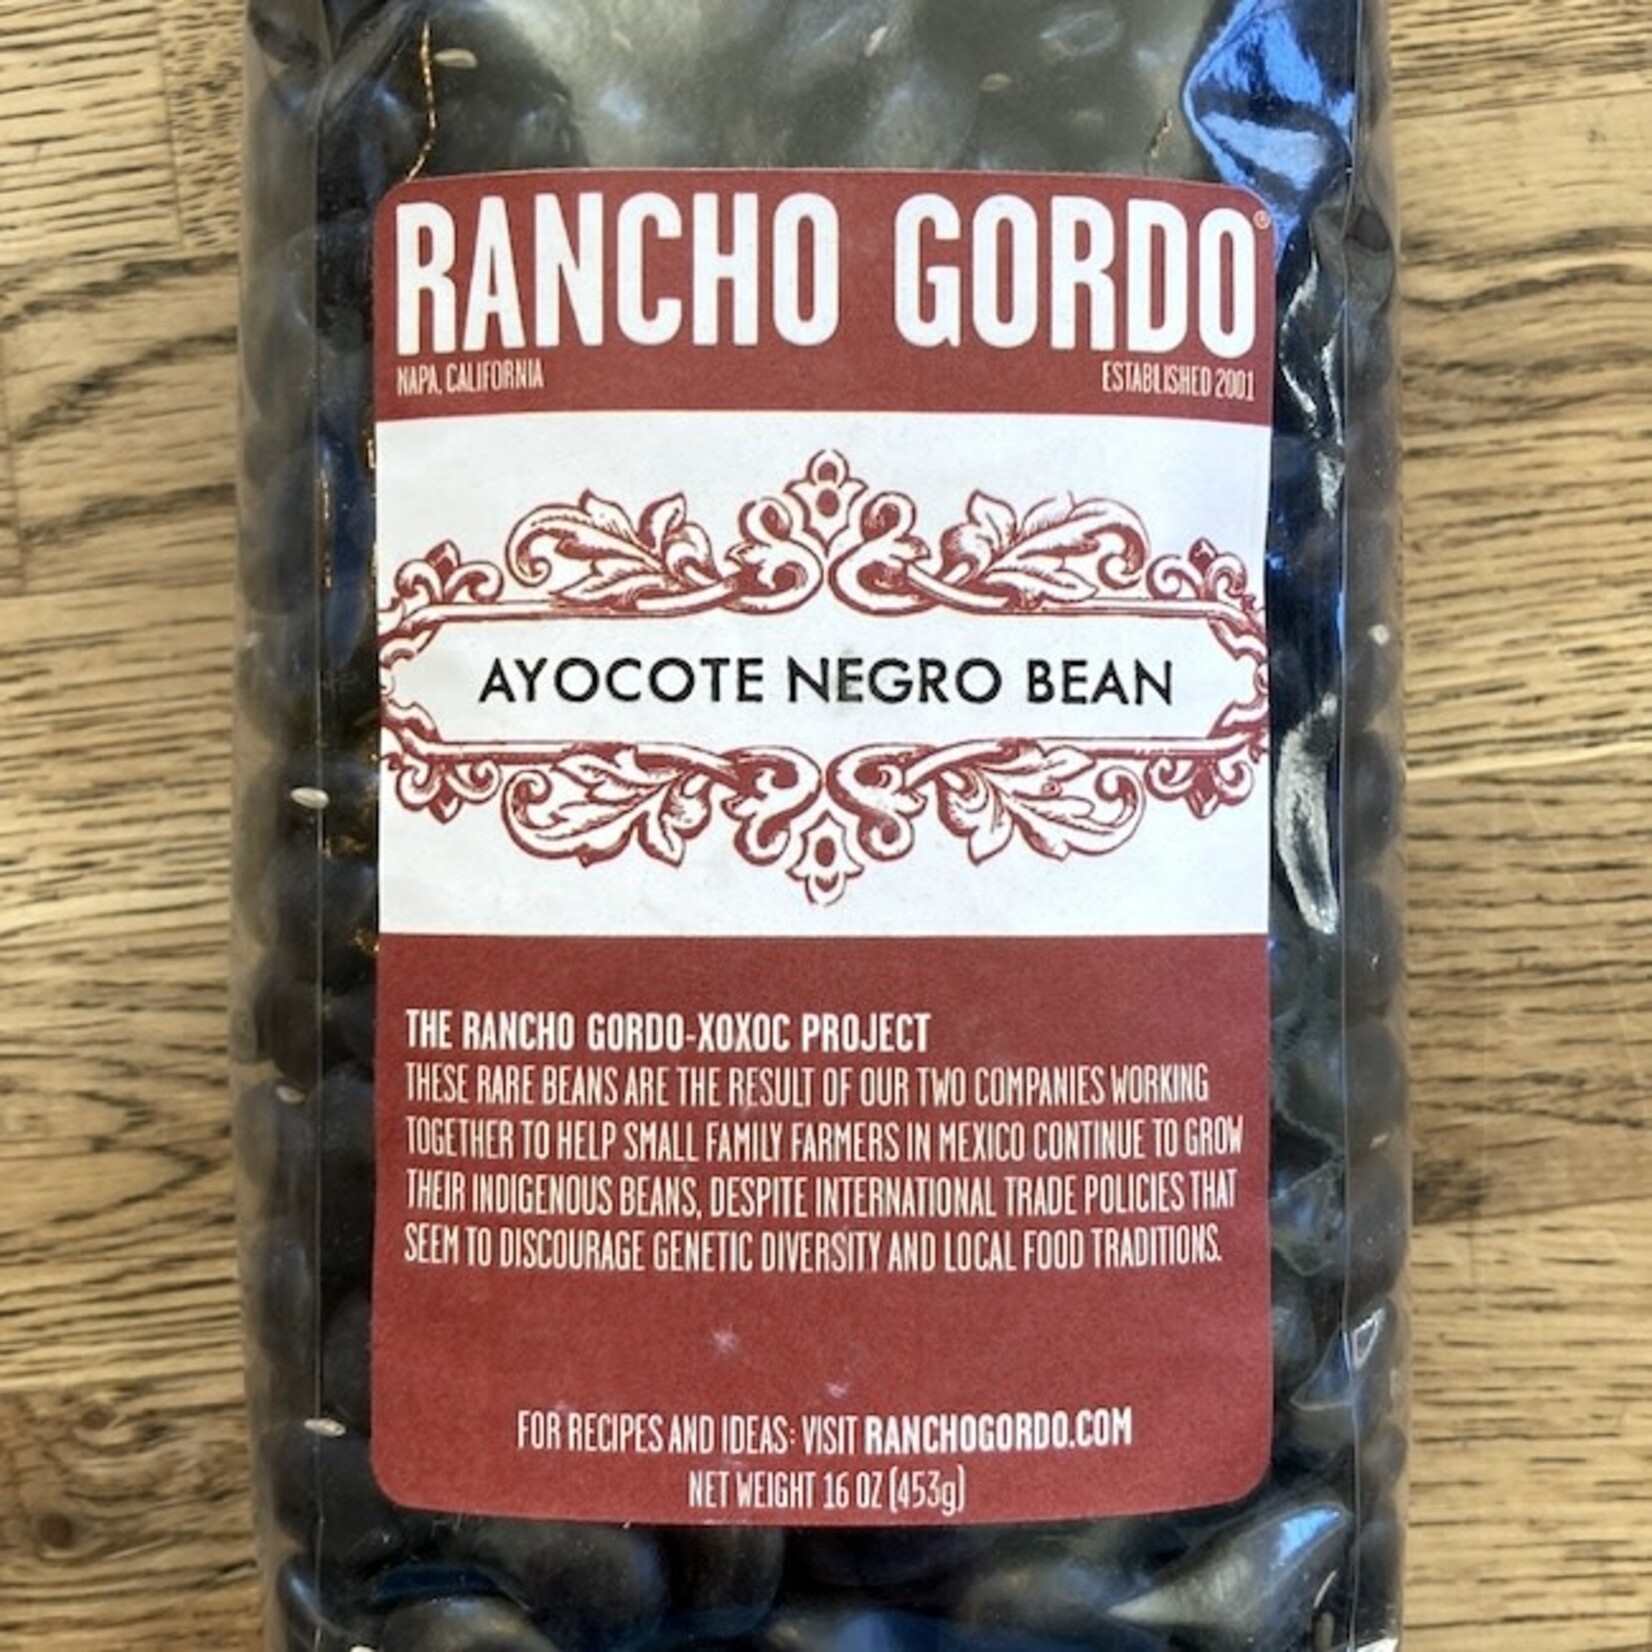 USA Rancho Gordo Ayocote Negro Bean